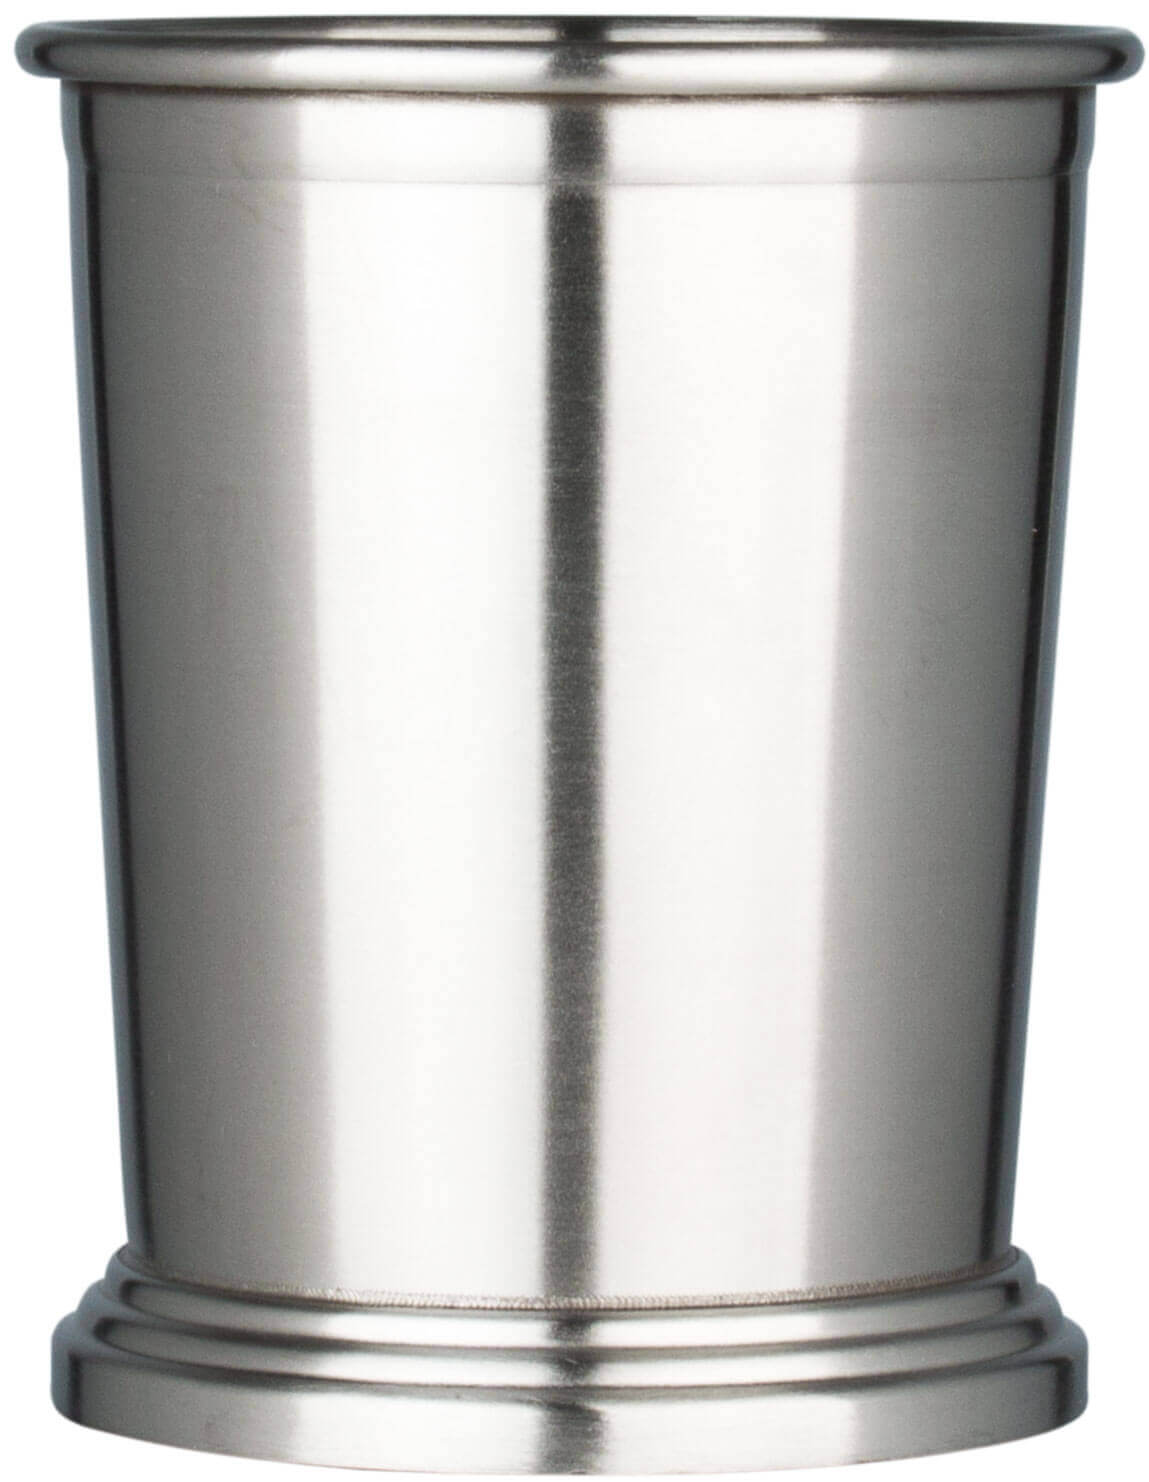 Julep cup, stainless steel - 350ml - irregular stock